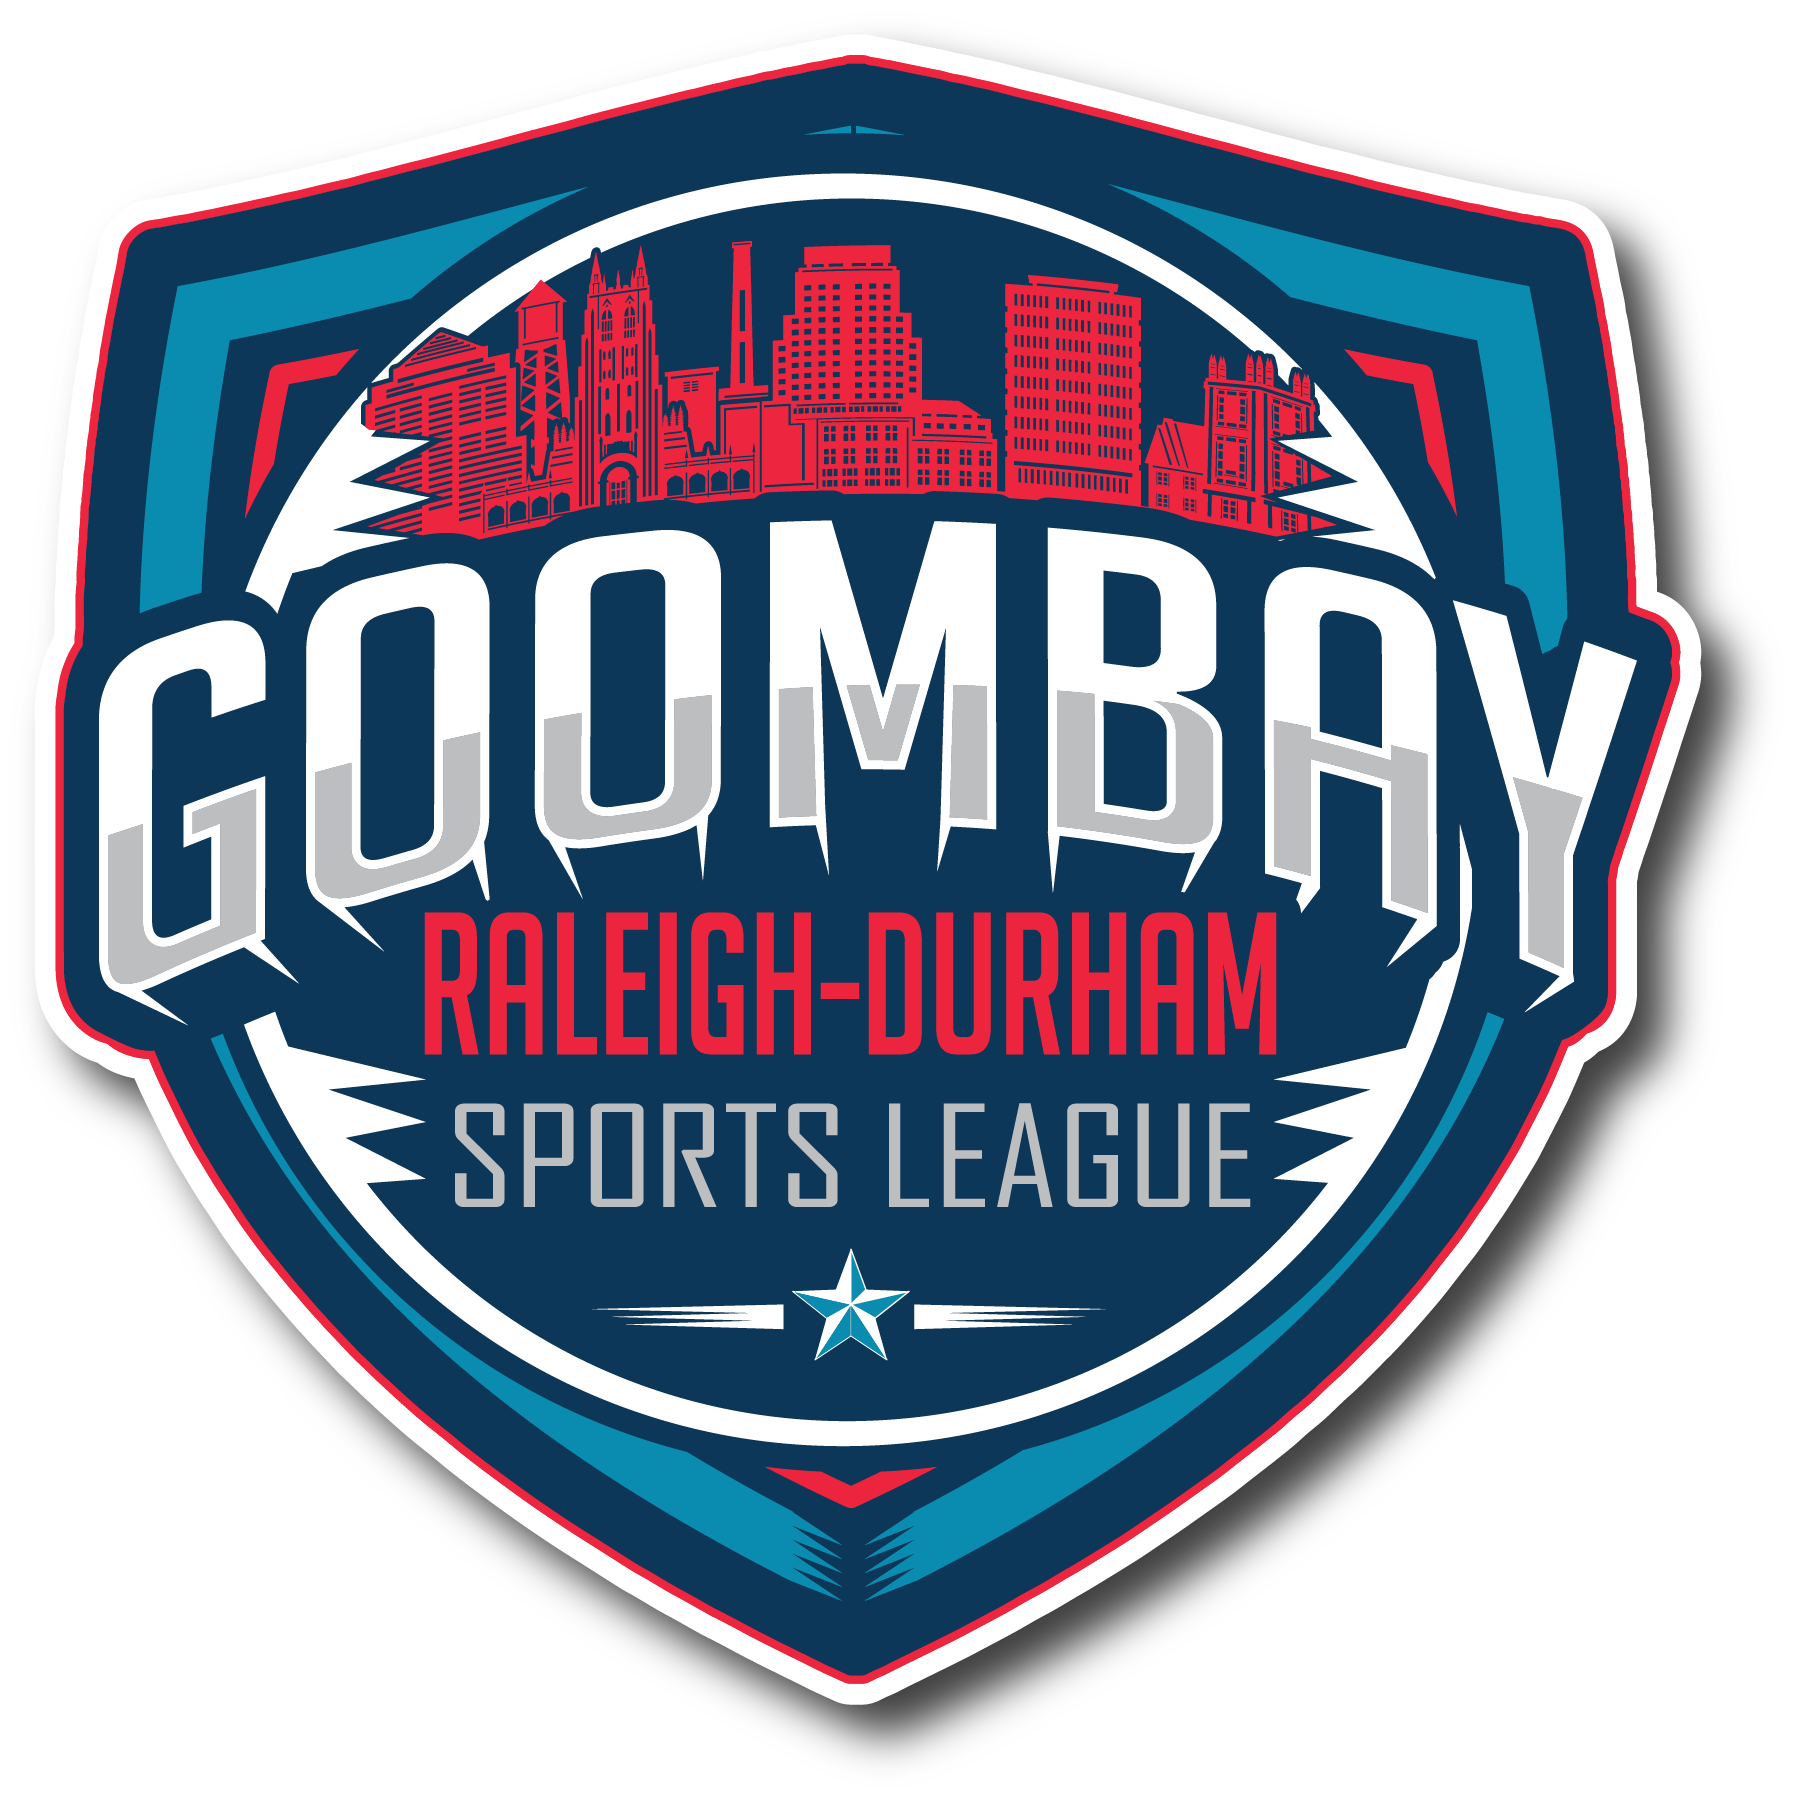 Goombay Raleigh Durham Tournaments Goombay RaleighDurham